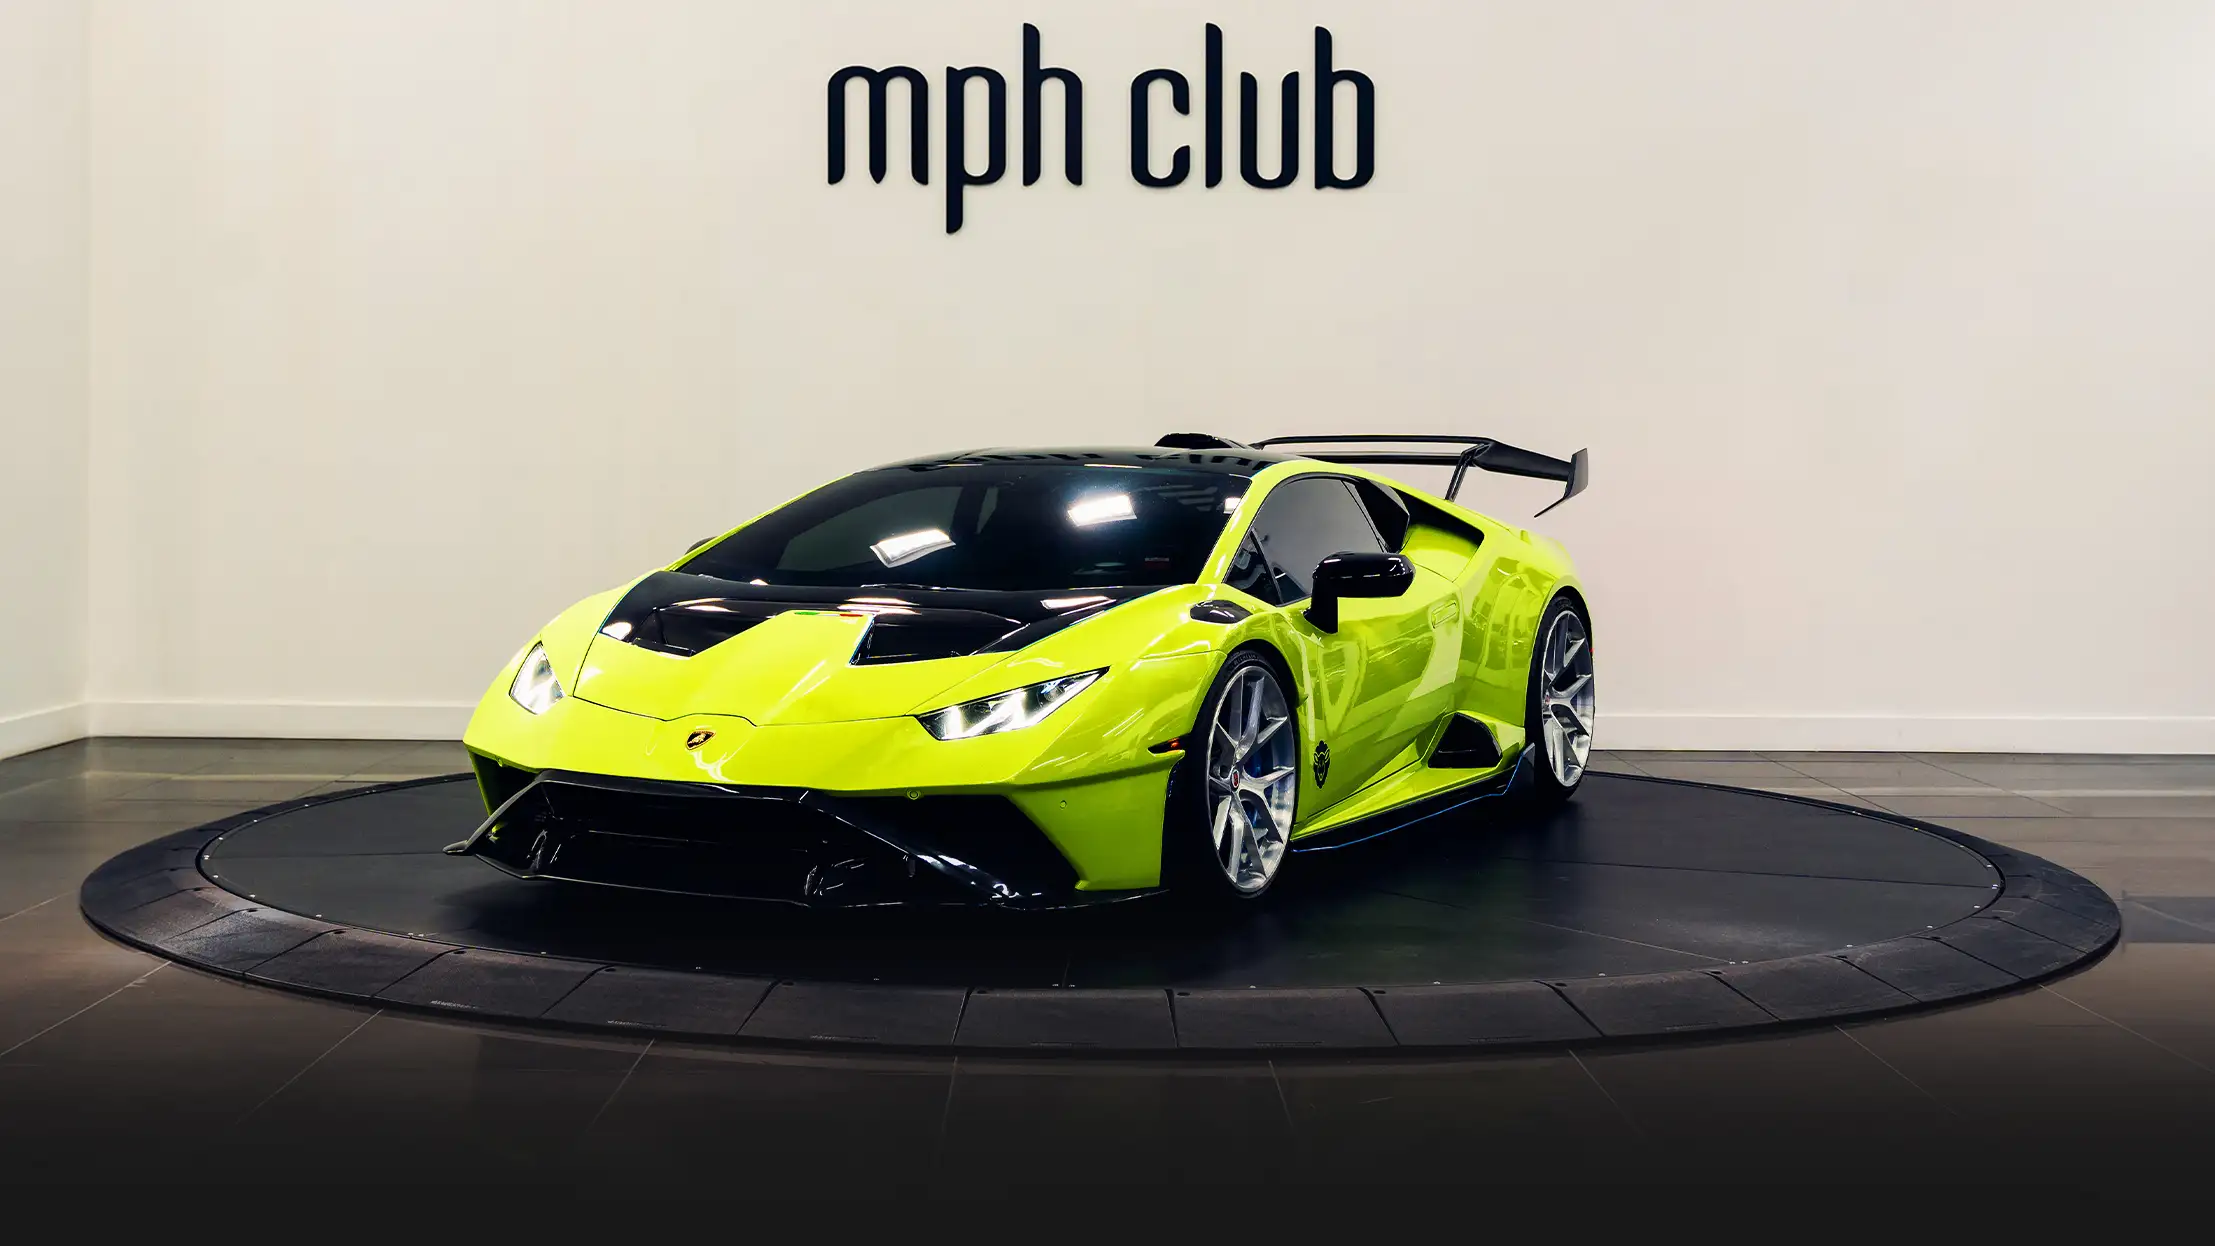 Green Lamborghini Huracan rental profile view - mph club